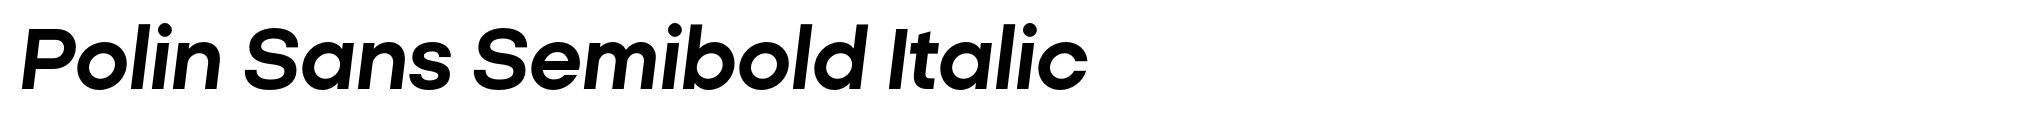 Polin Sans Semibold Italic image